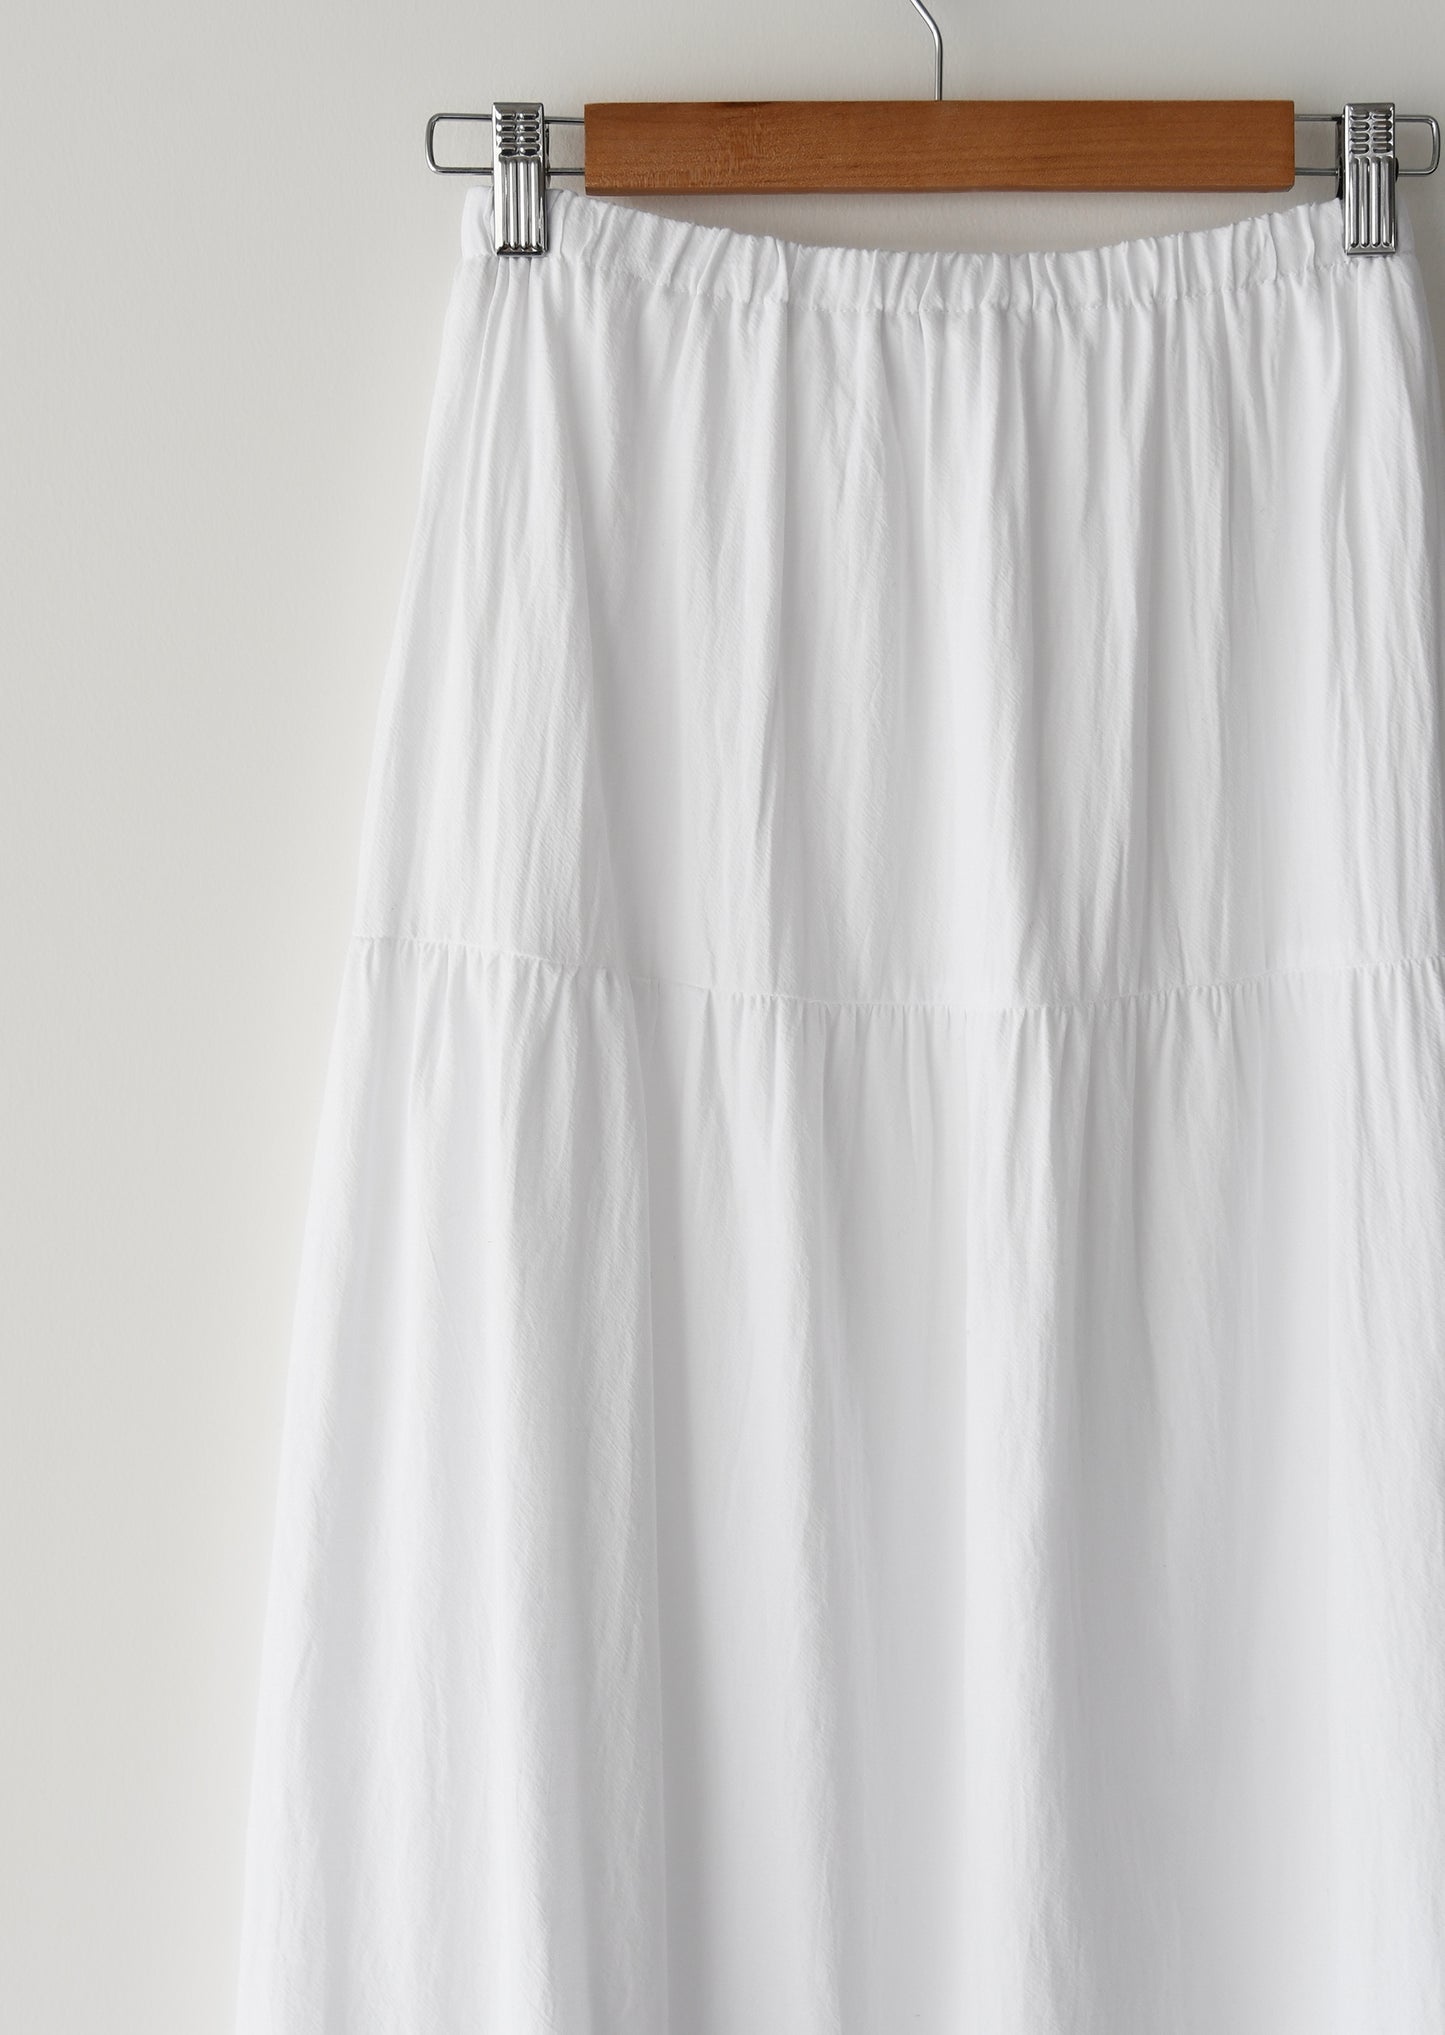 Maxi cotton skirt